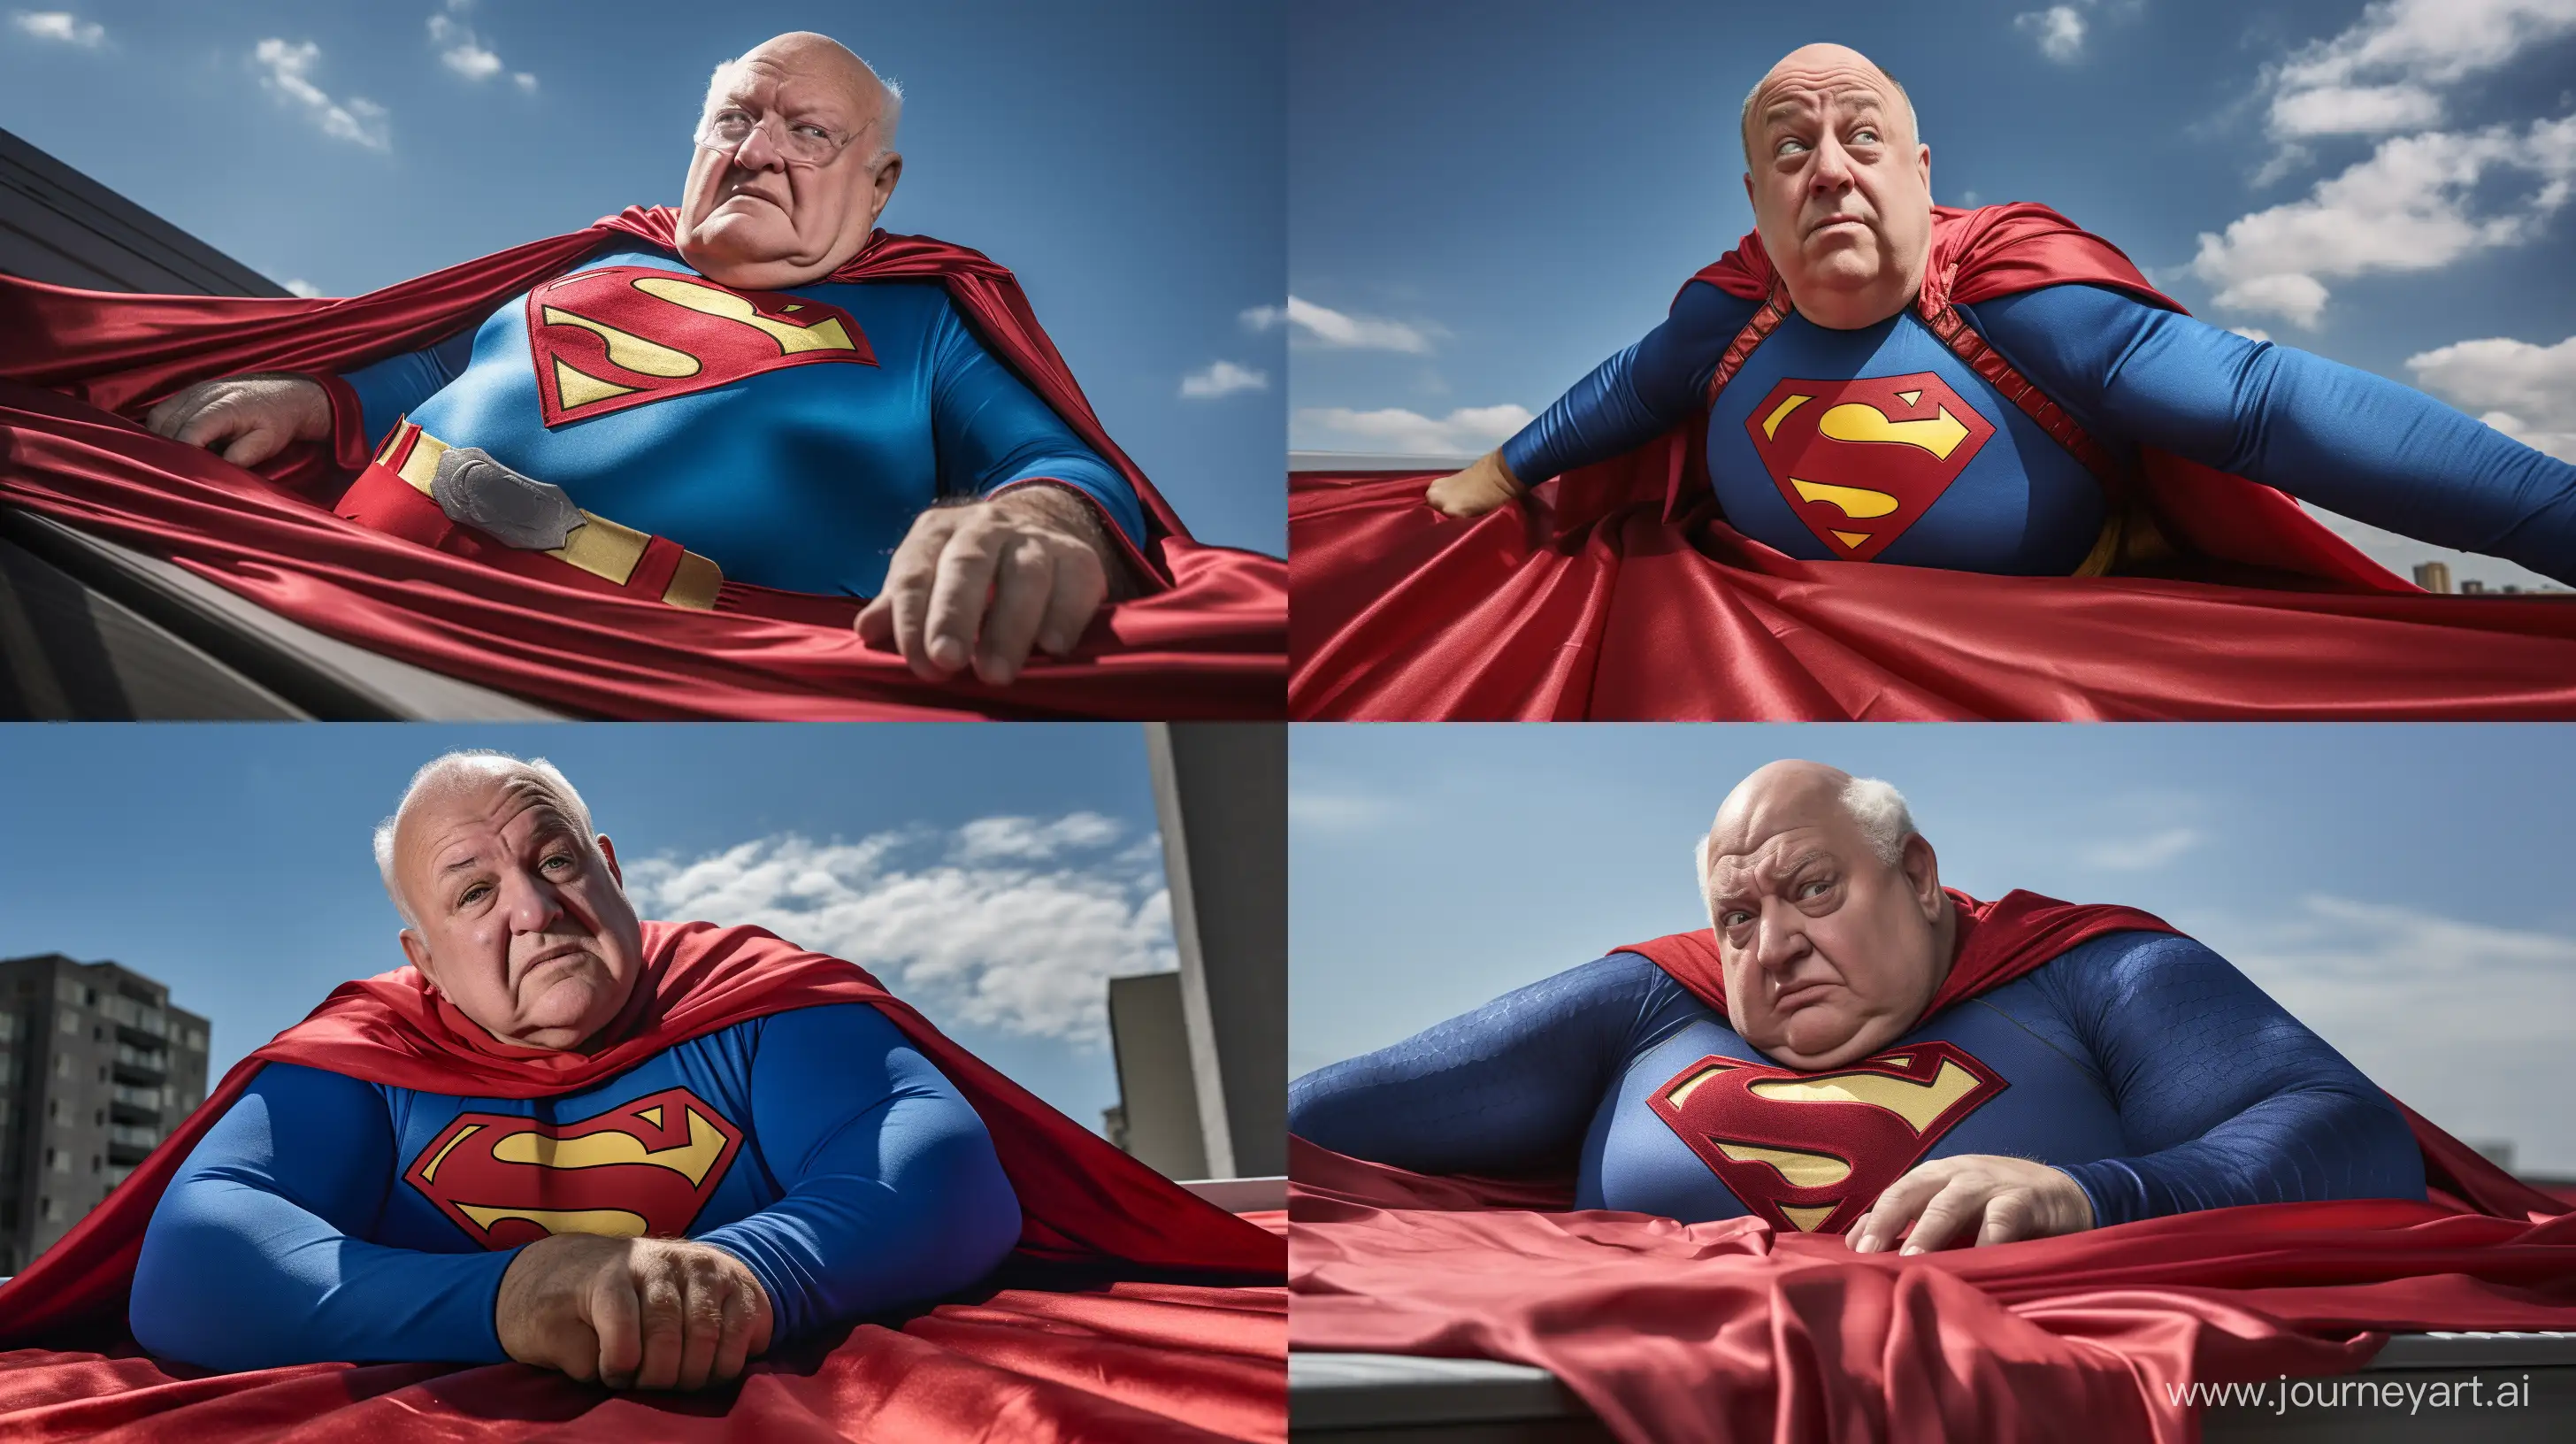 Elderly-Superman-Enjoying-a-Rooftop-Siesta-in-Vibrant-Blue-Spandex